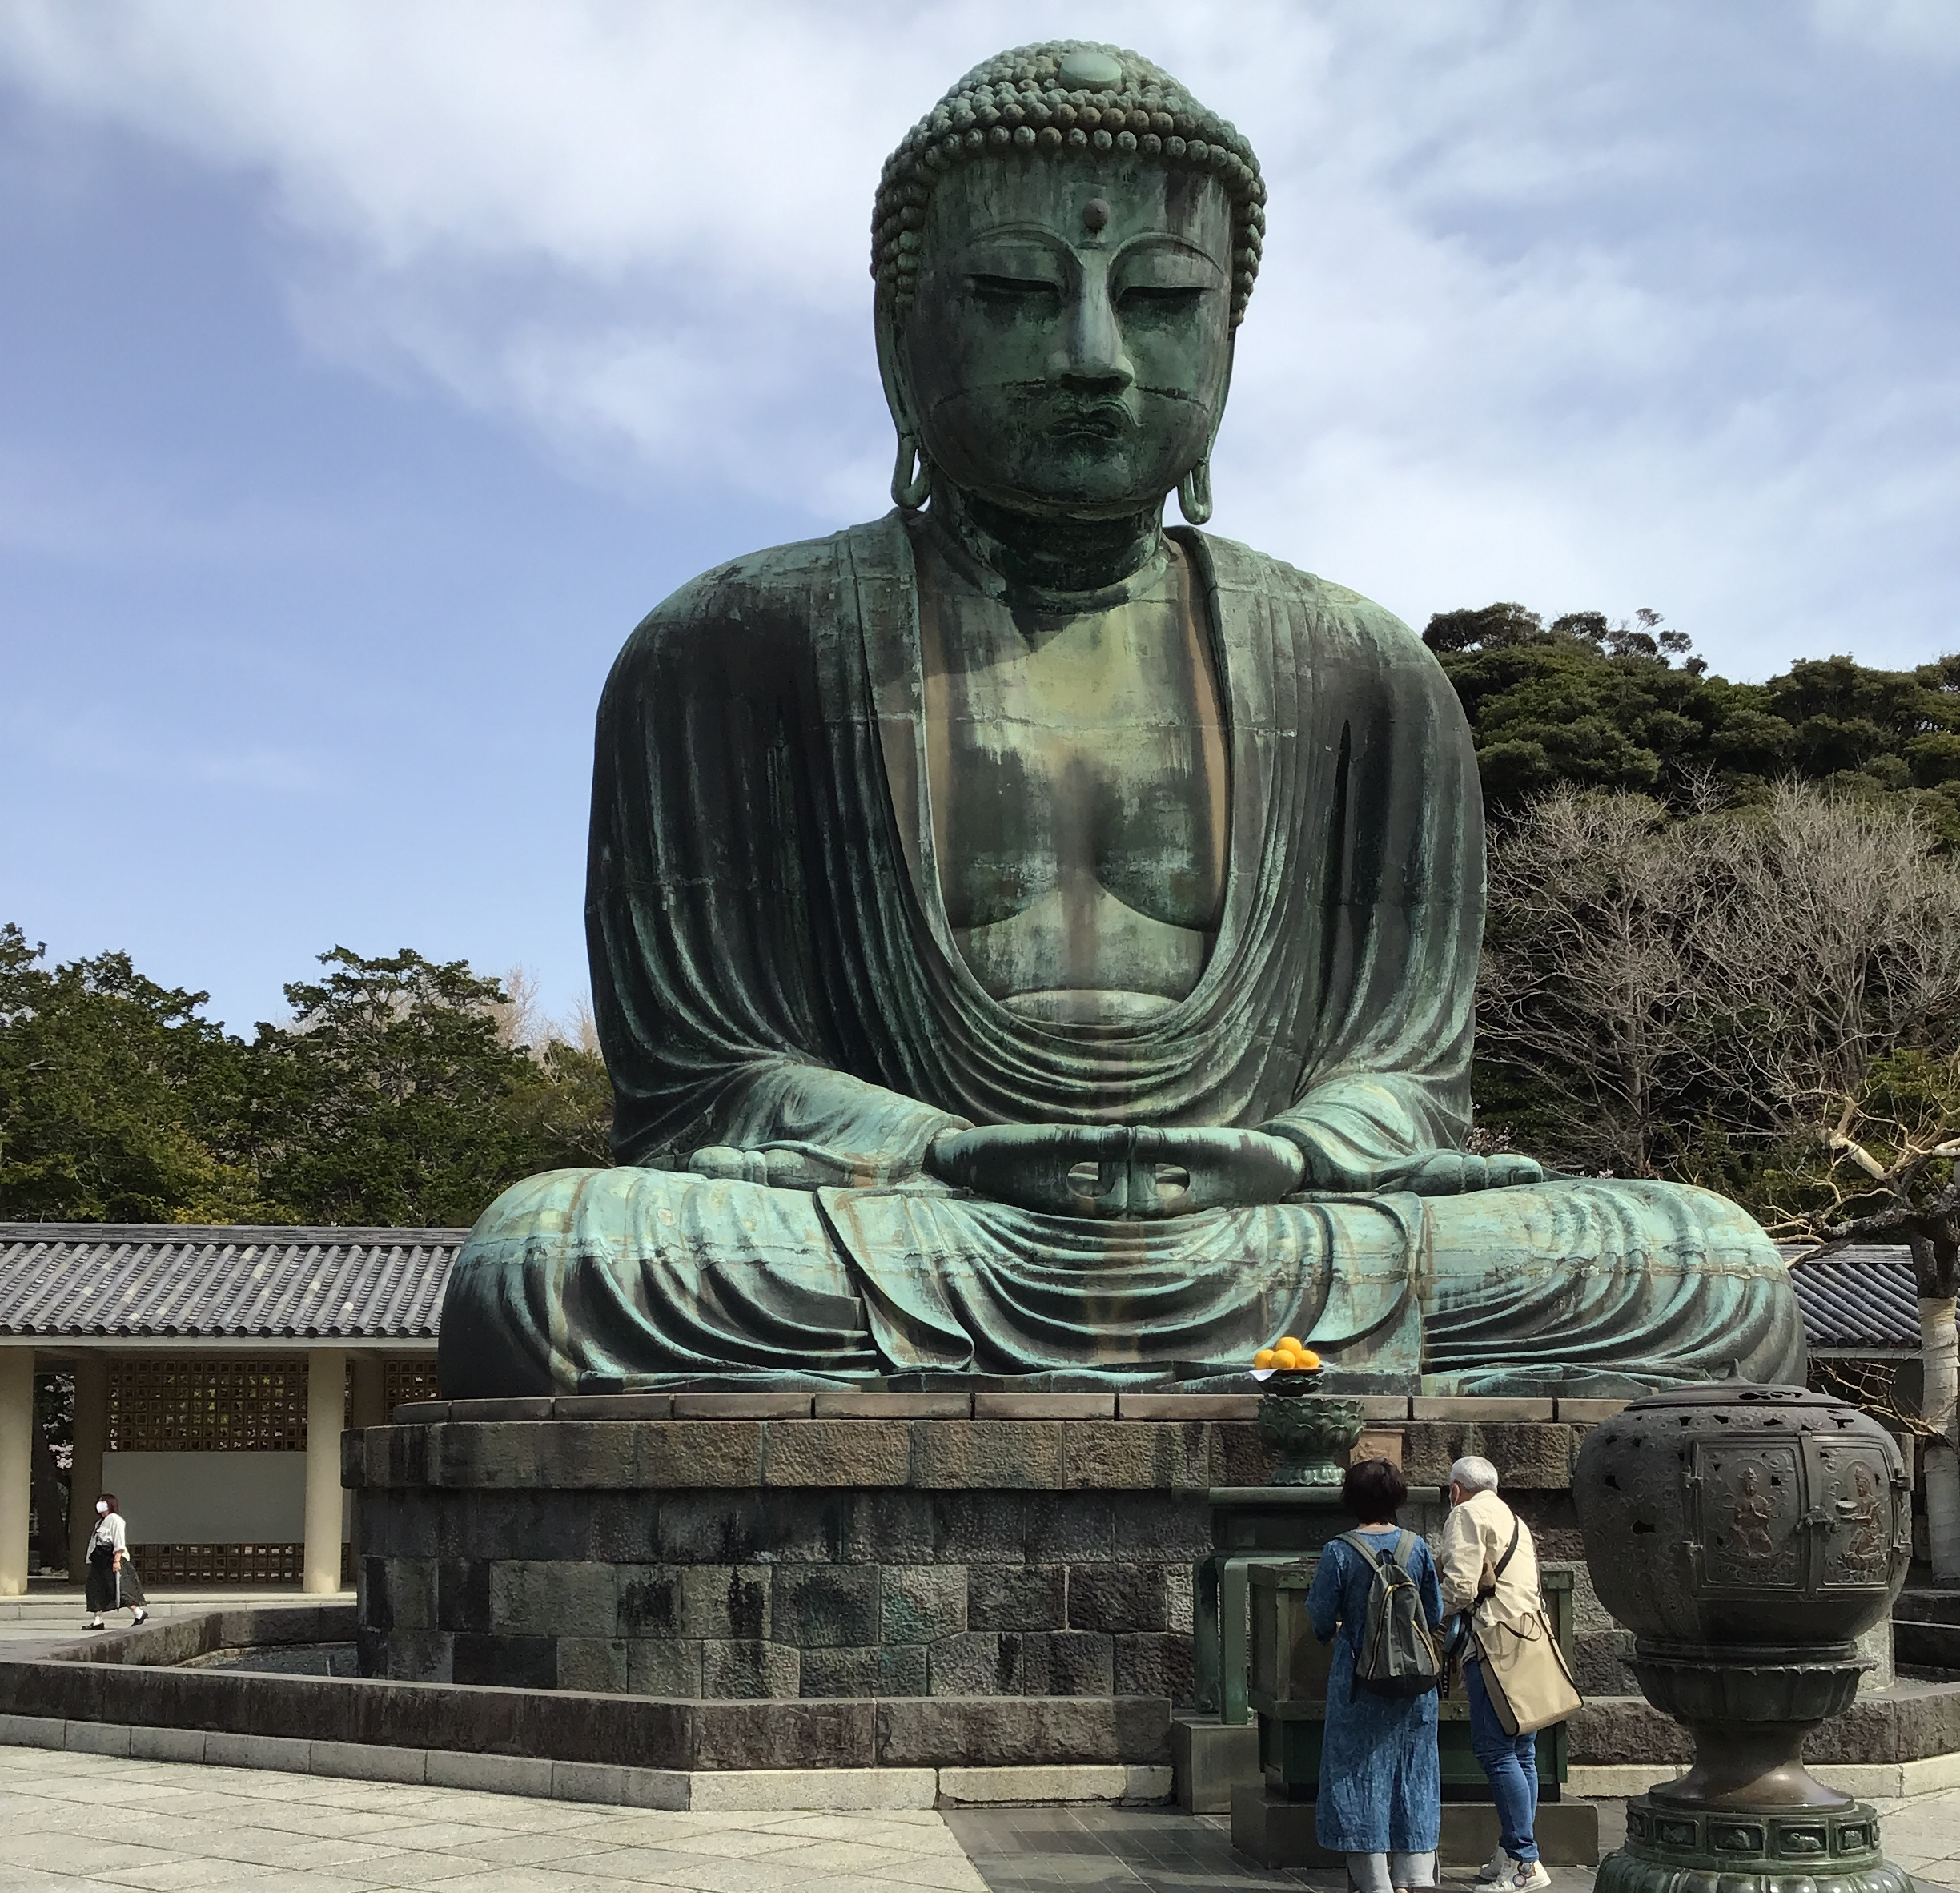 The giant buddha statue